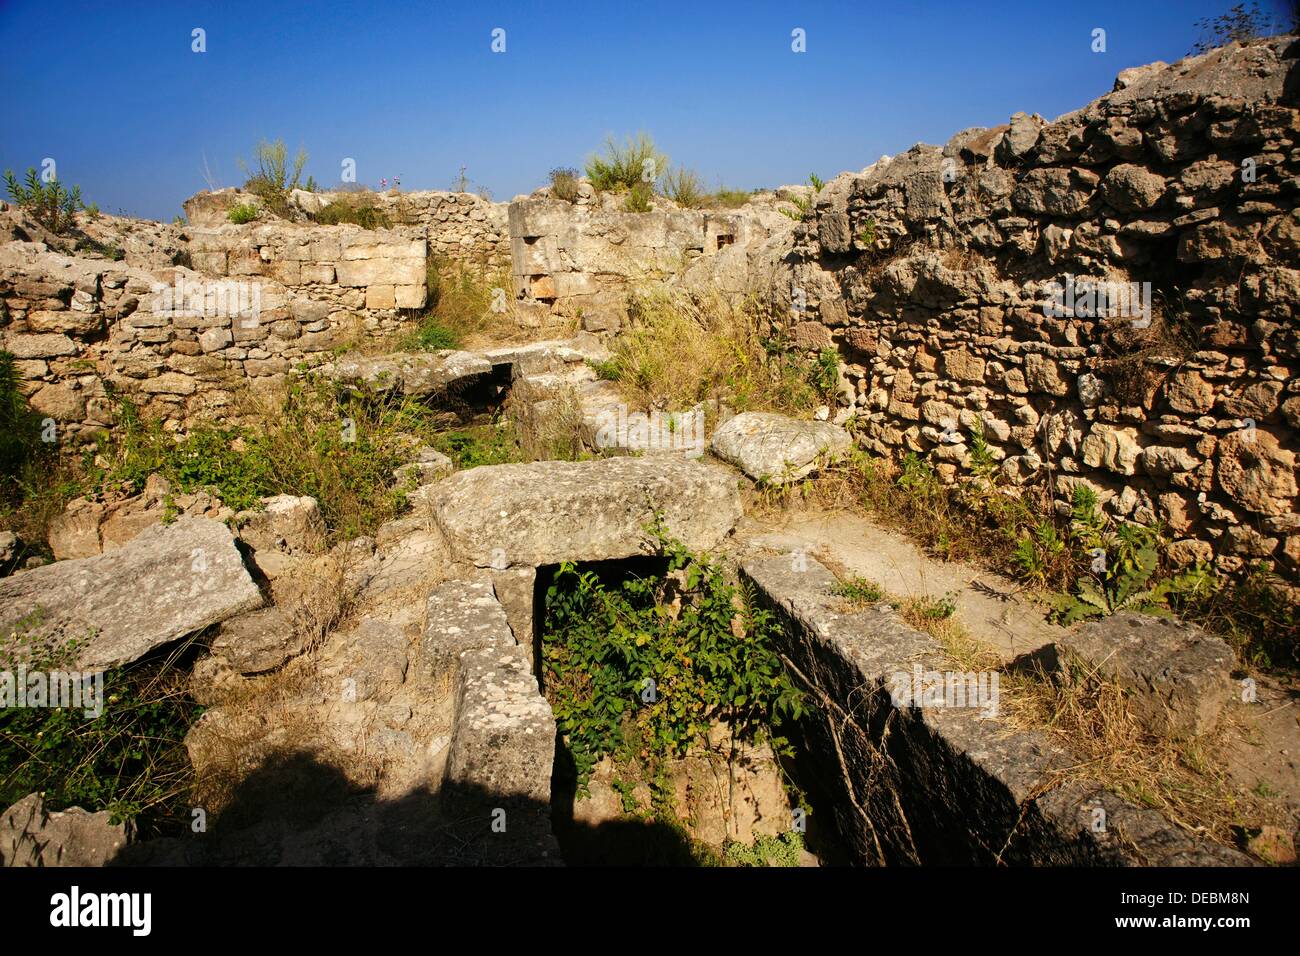 14th century BC Royal tombs, Ugarit, Syria Stock Photo